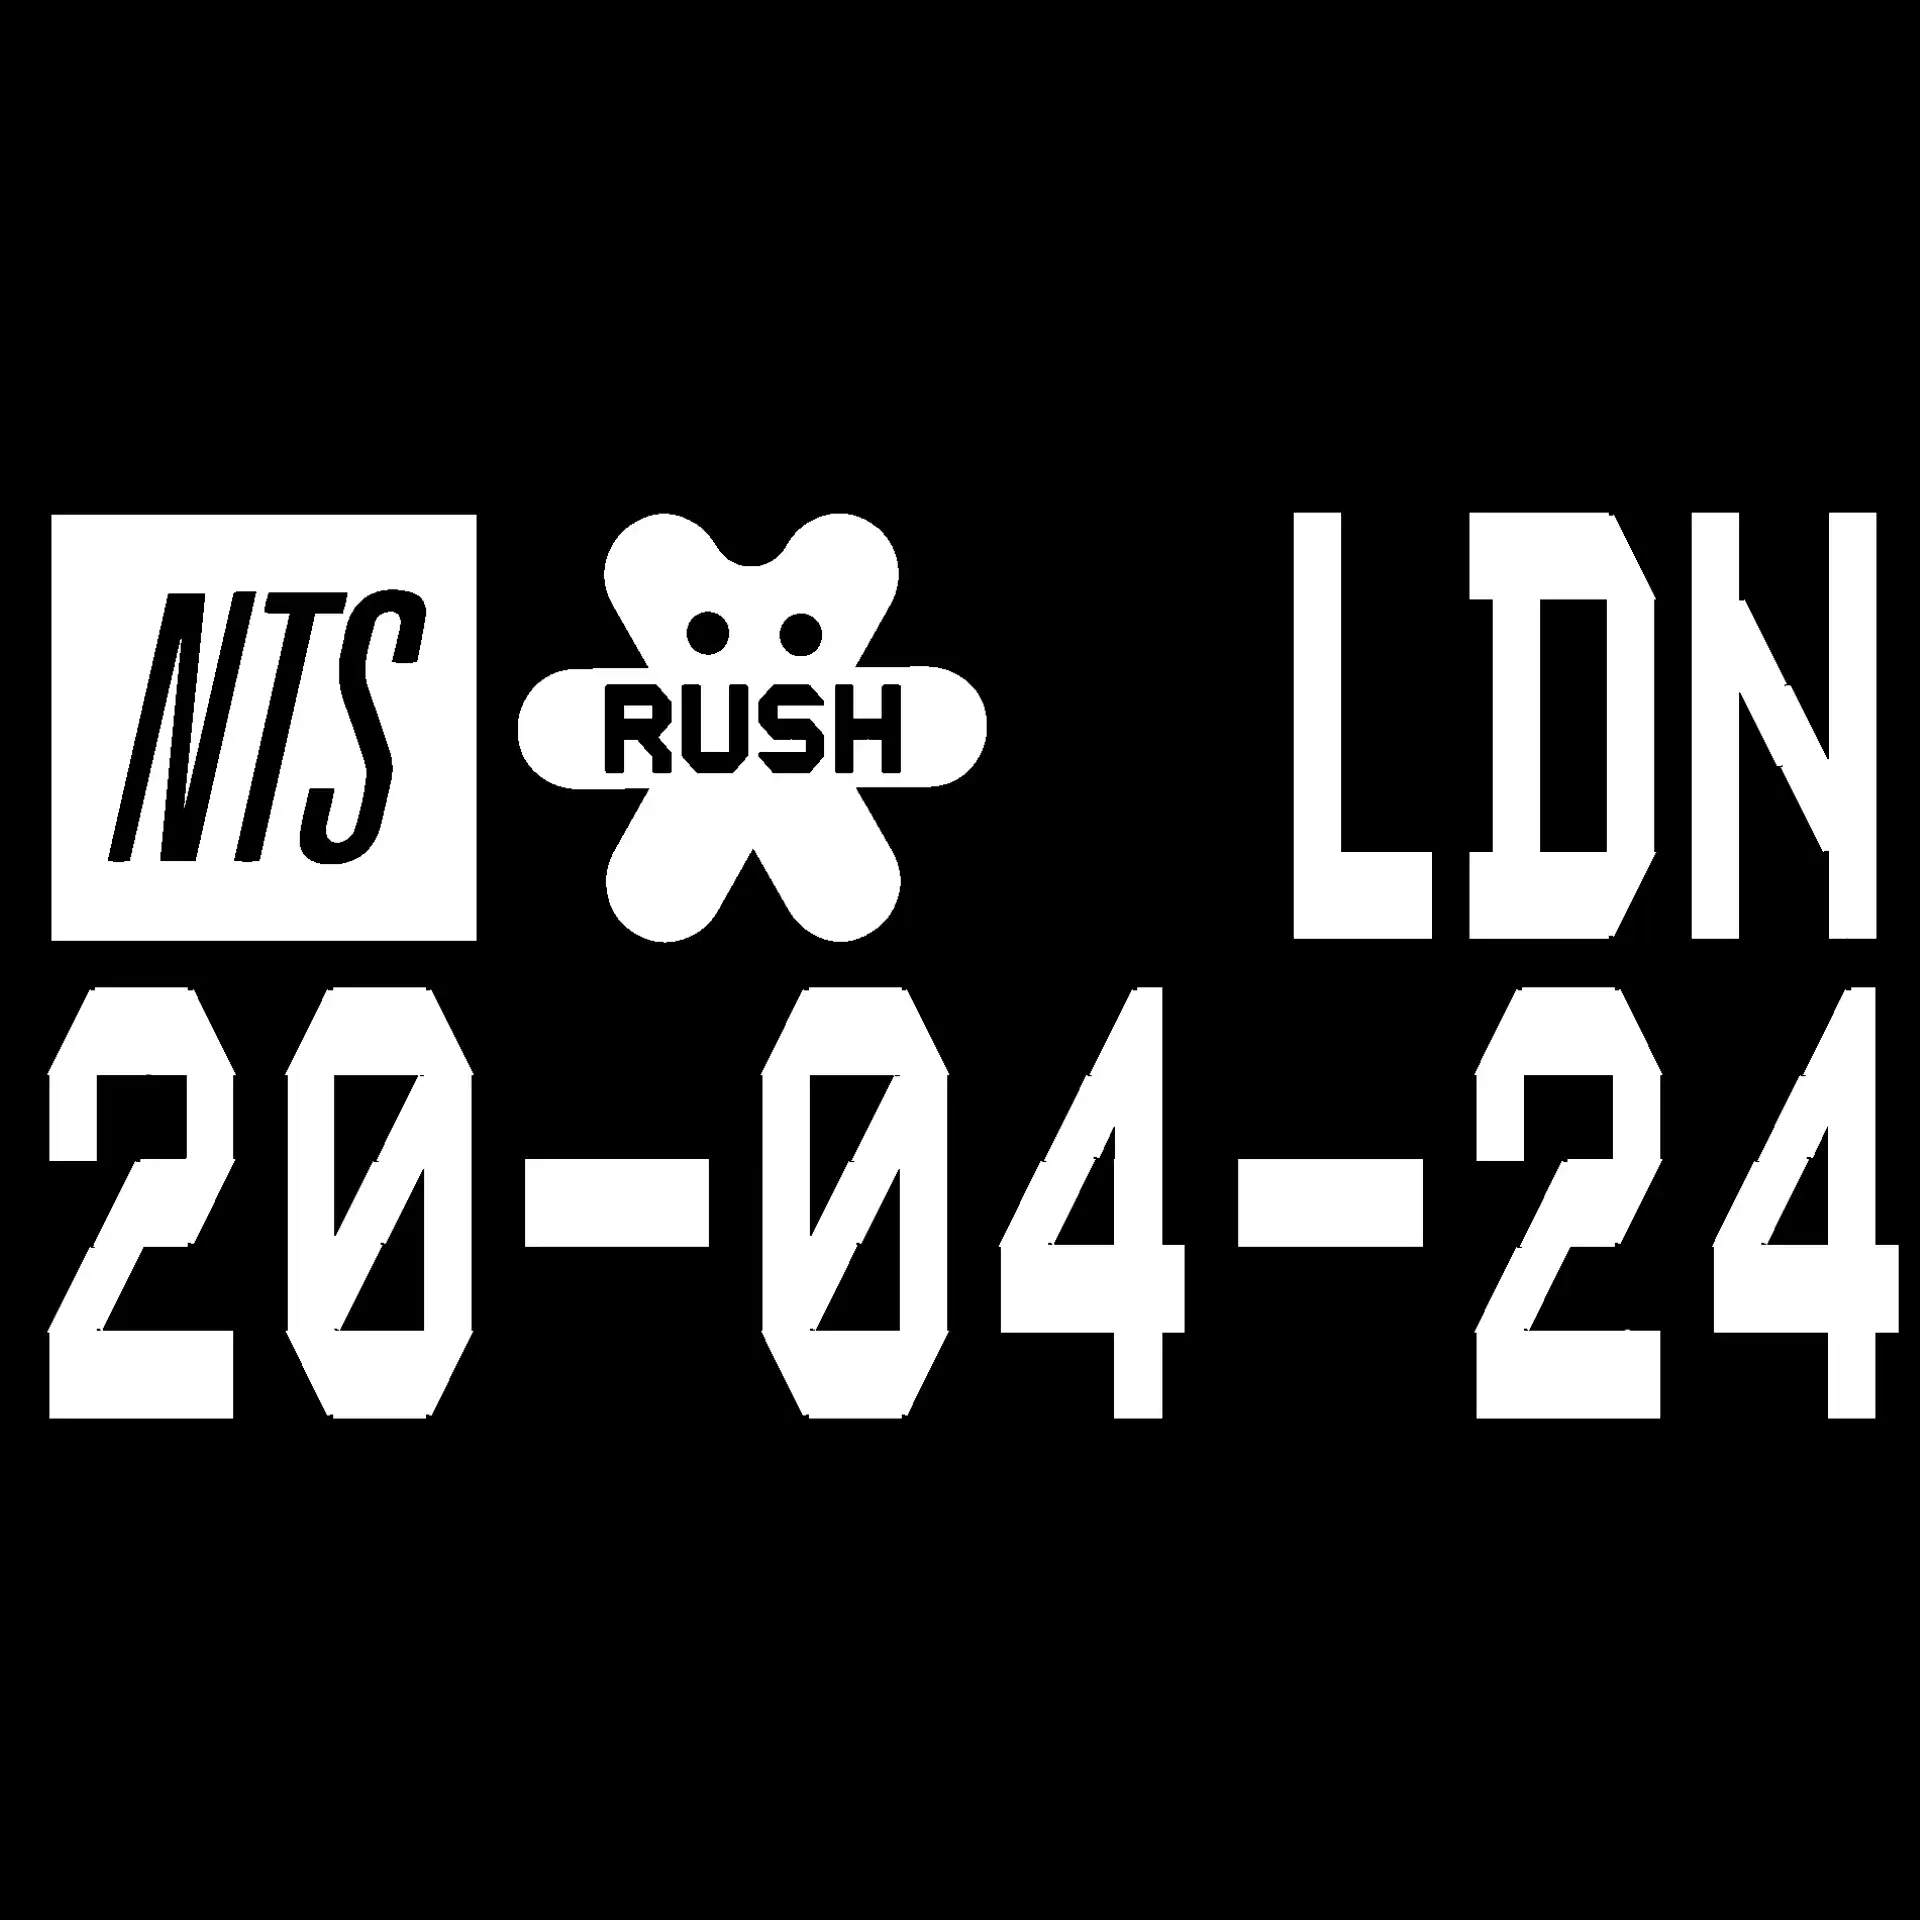 NTS RUSH - London - Página trasera